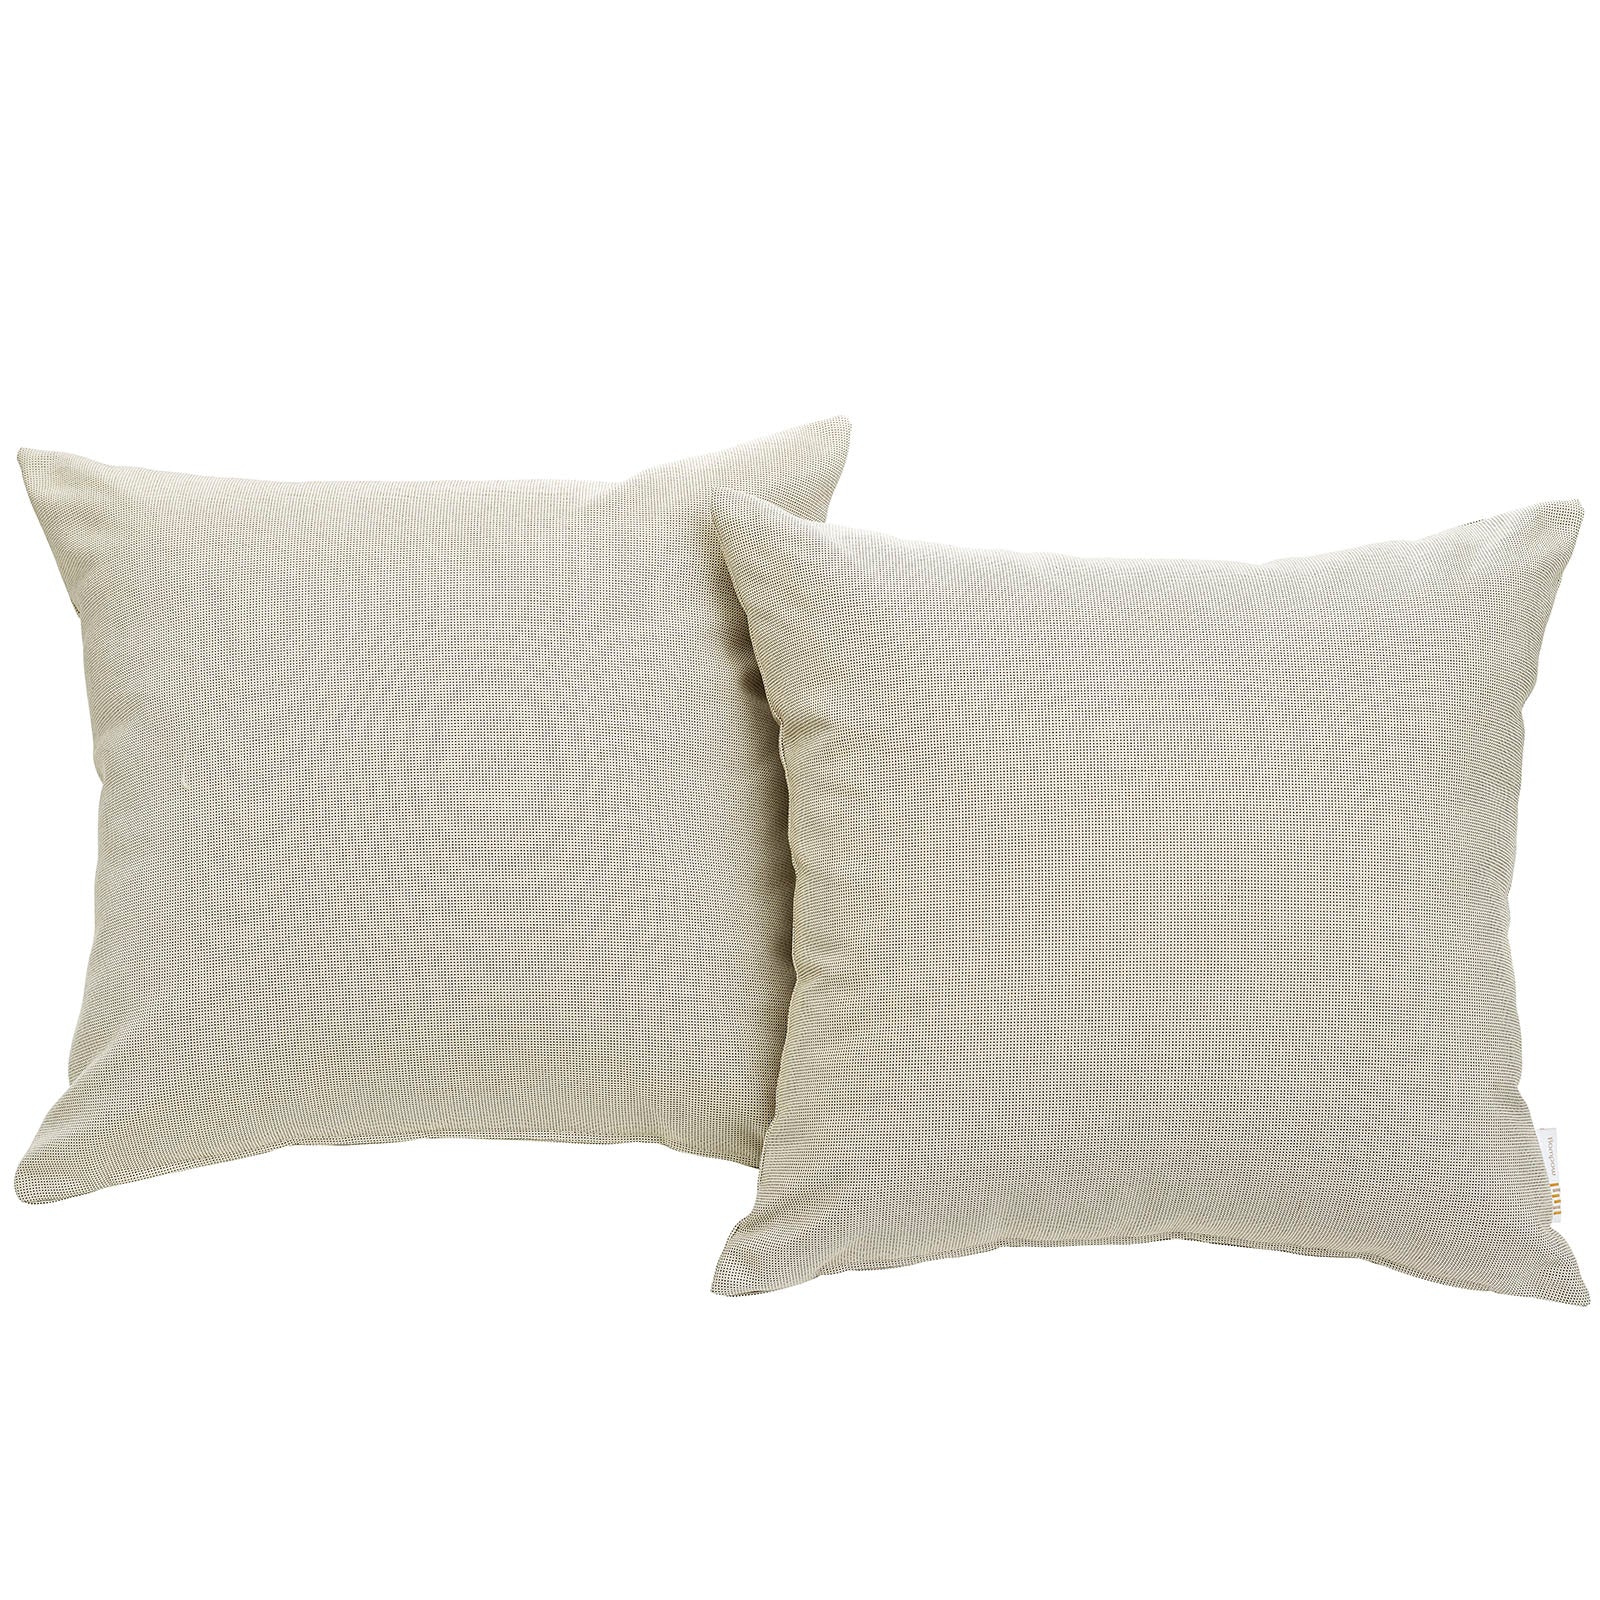 Modway Outdoor Pillows & Cushions - Convene Outdoor Patio Pillow Beige (Set of 2)